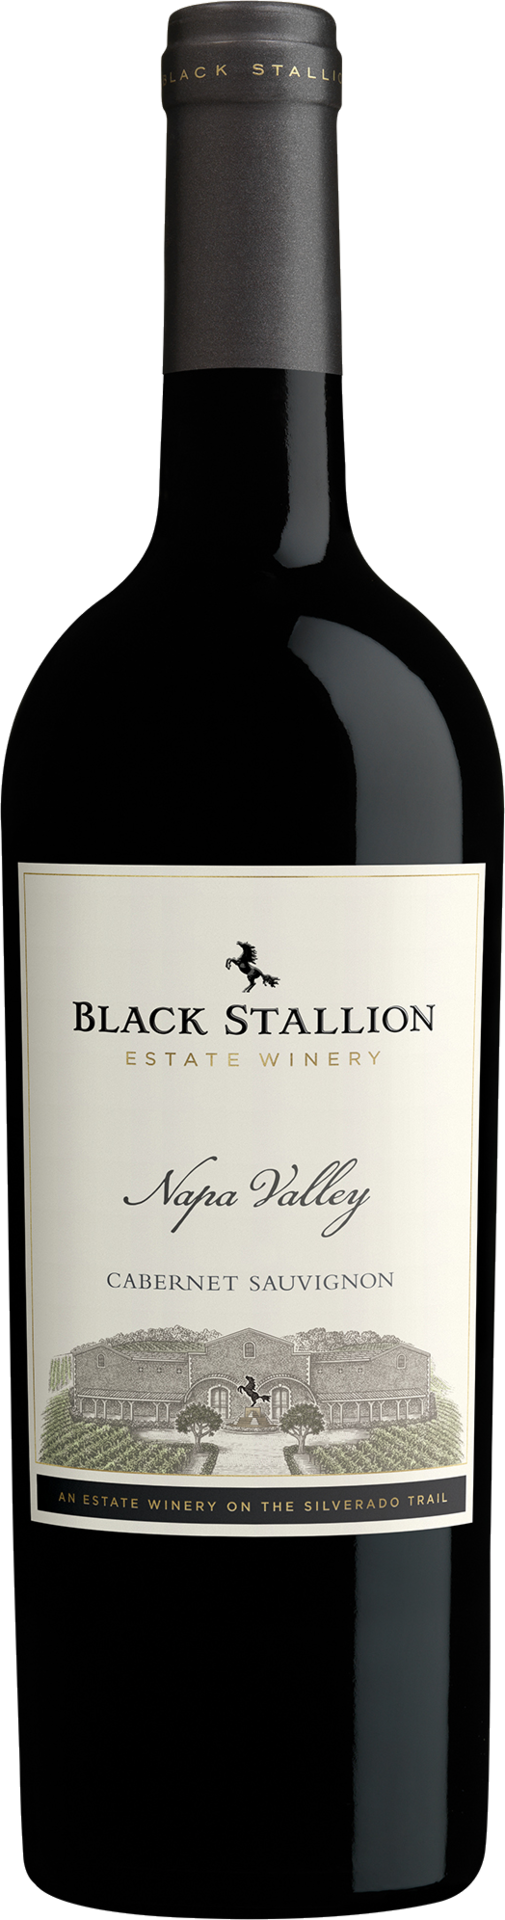 Black Stallion Cabernet Sauvignon - 2019